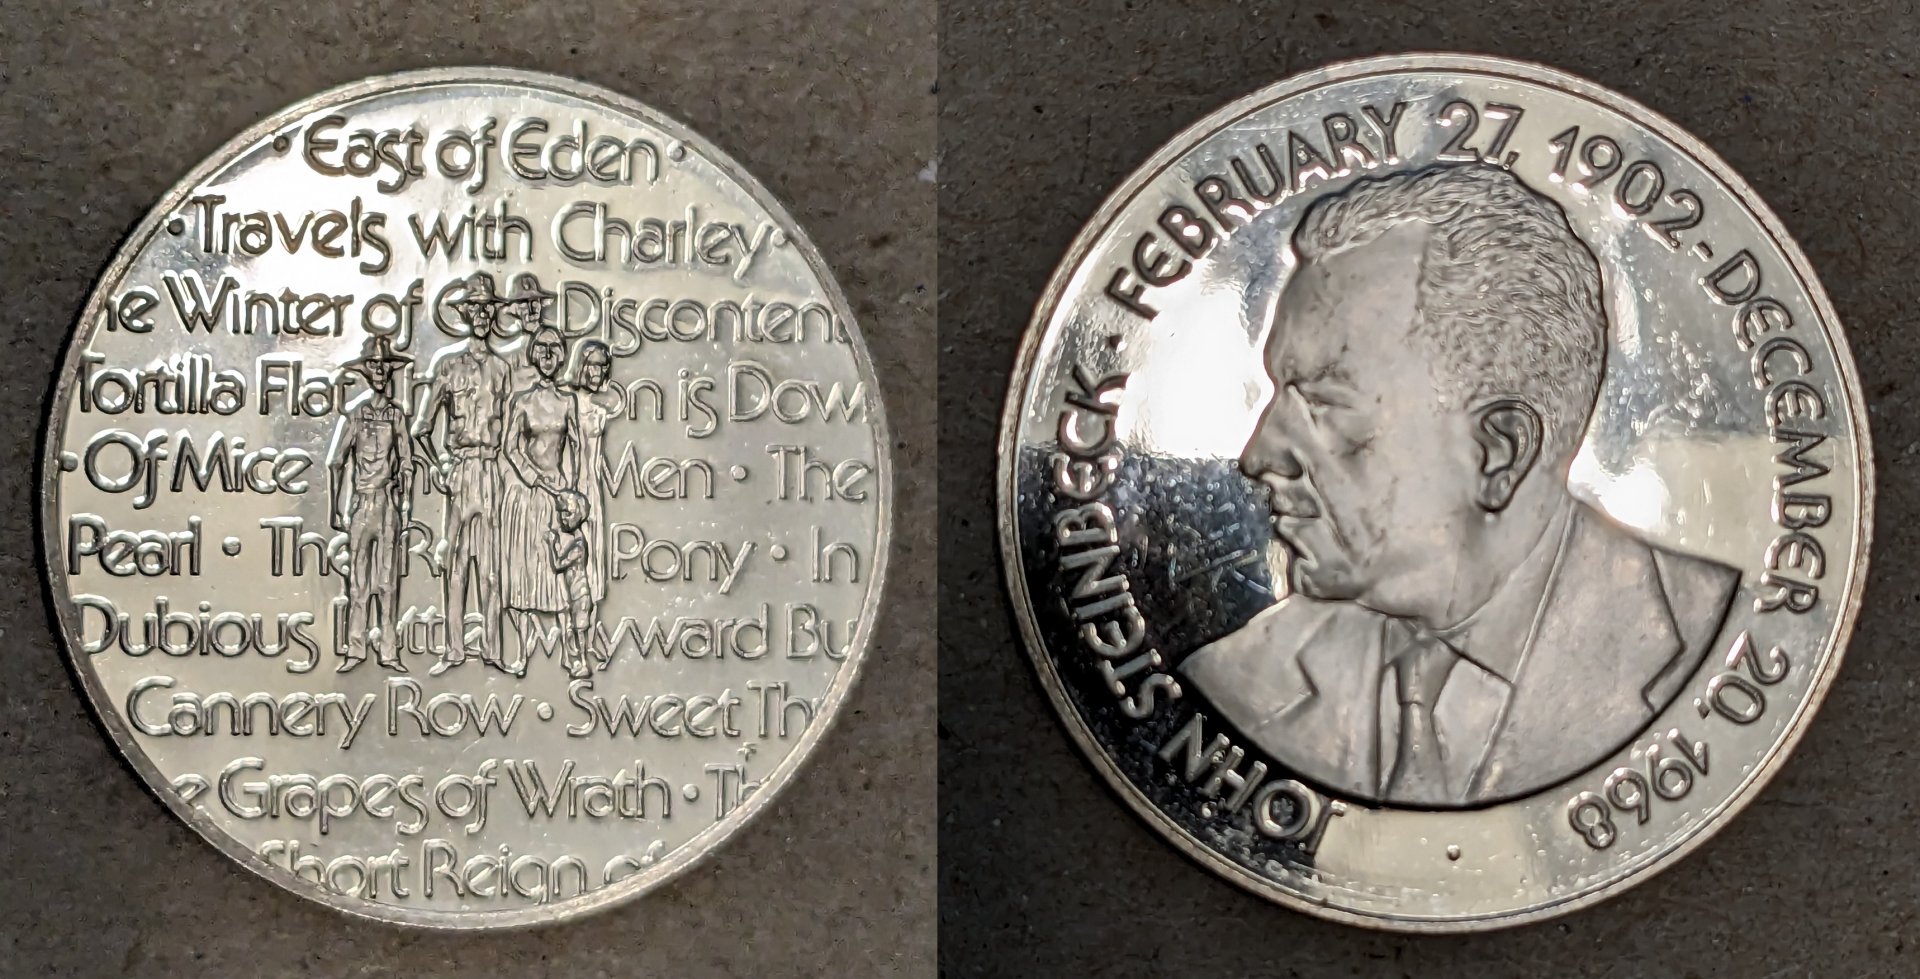 steinbeck medal.jpg